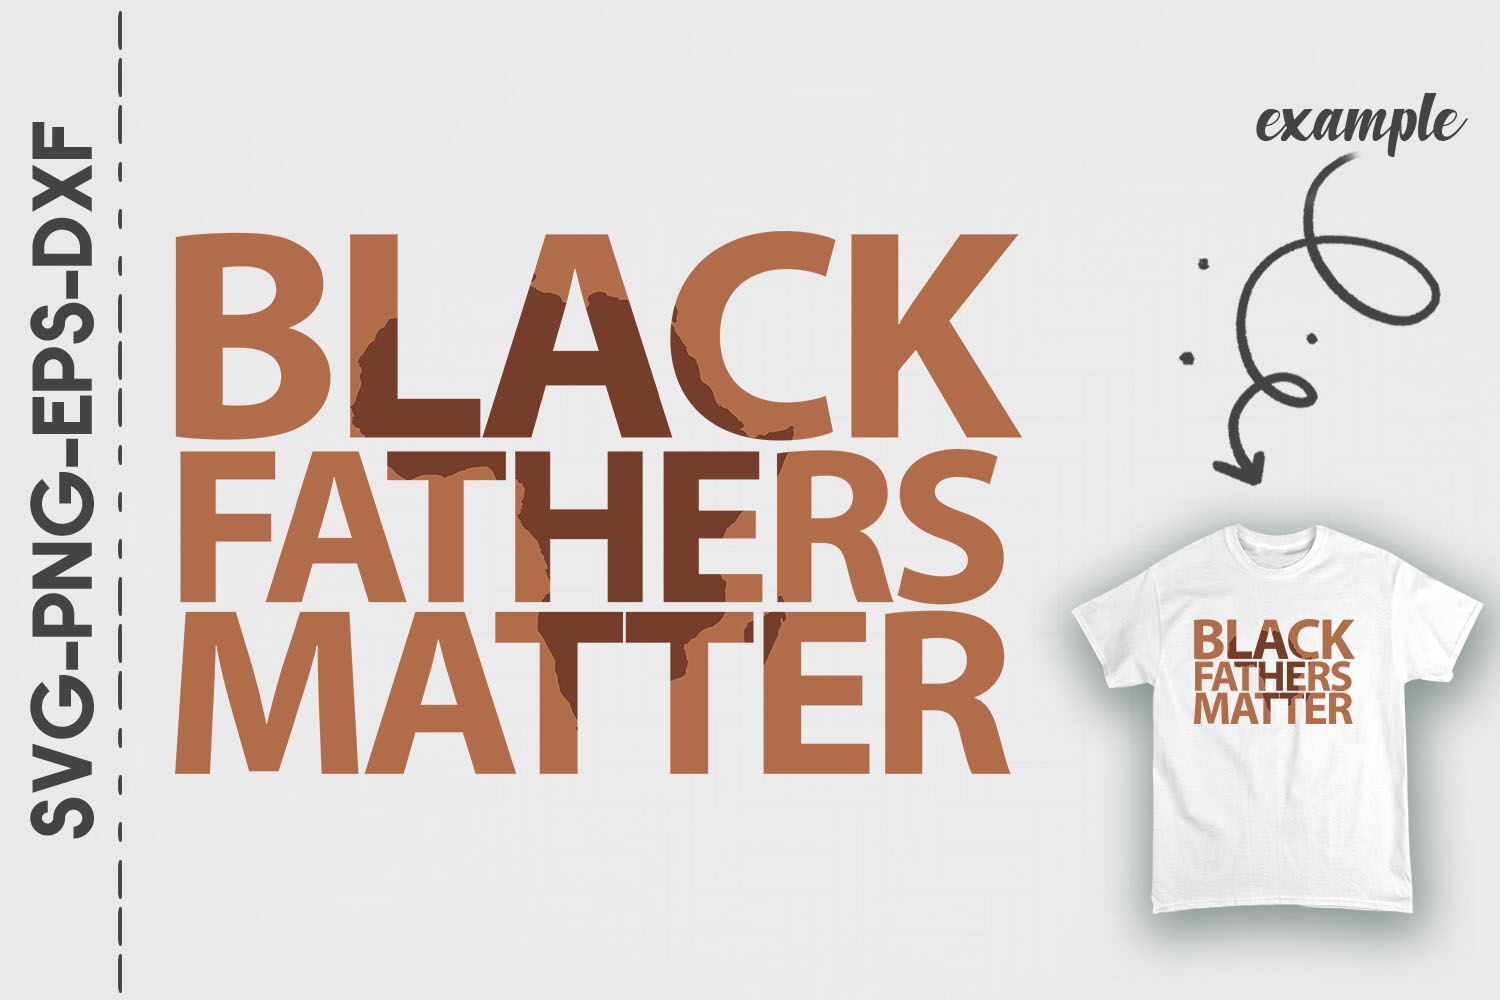 Black Fathers Matter Blm Black Proud Blm By Utenbaw Thehungryjpeg Com